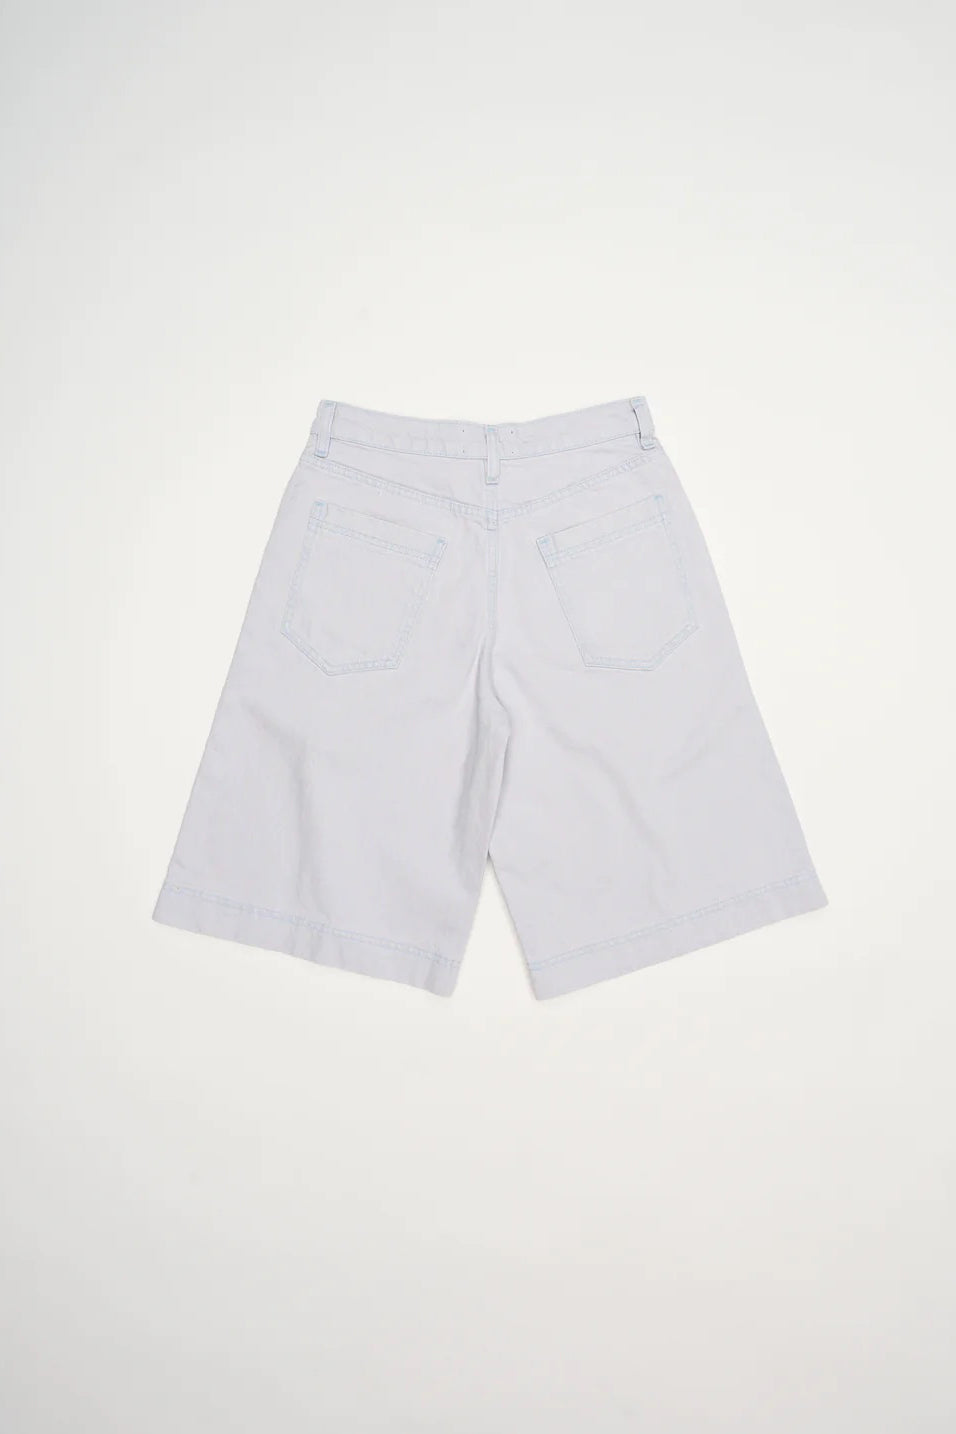 PV Repose Denim Shorts // Purple Tint